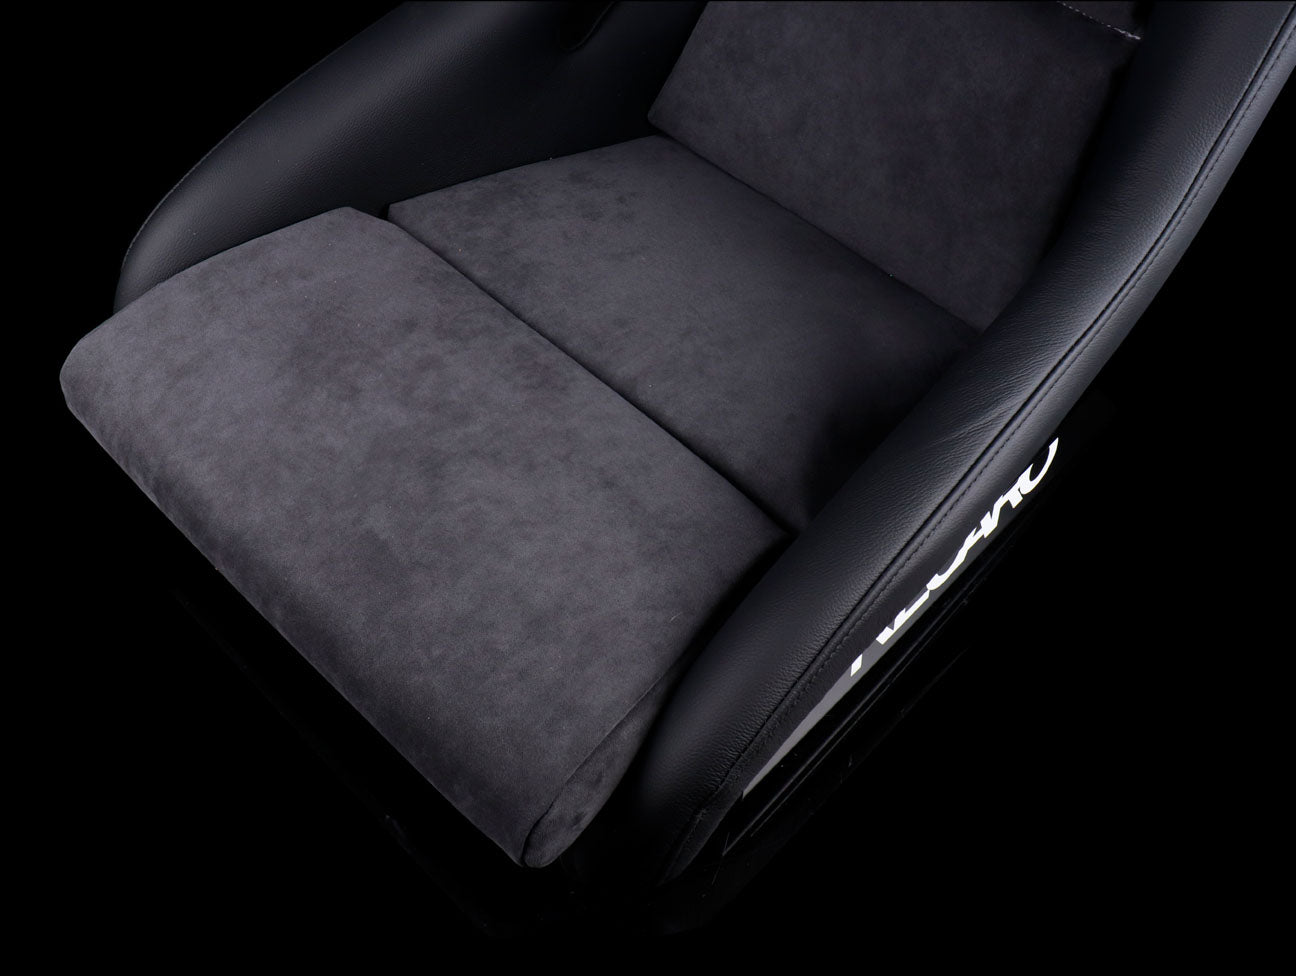 Recaro Pole Position Seat - Leather Black / Dark Grey Suede